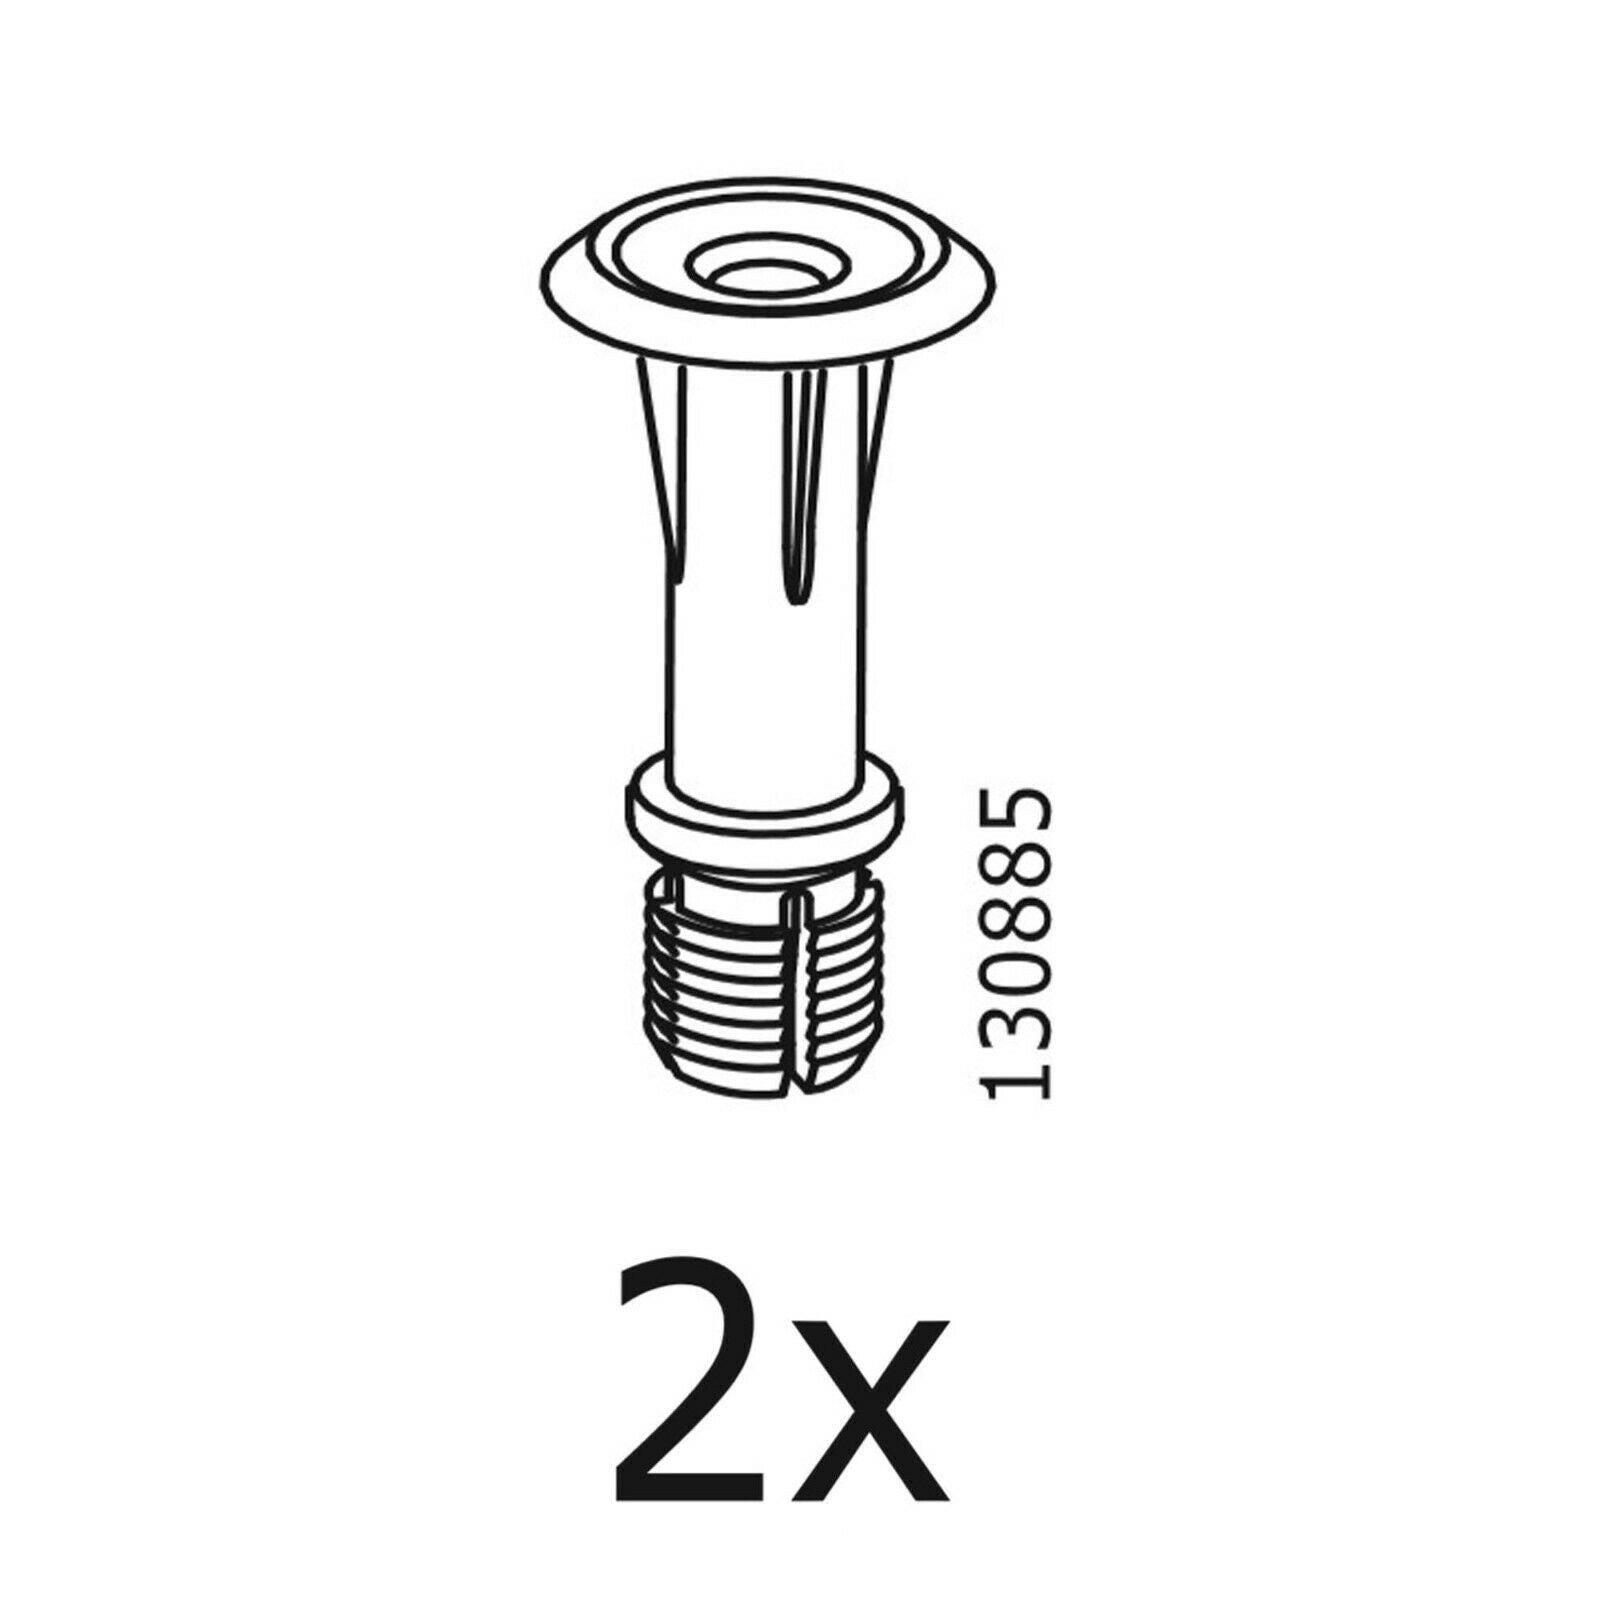 IKEA Screws Part # 130885 (2 pack) Furniture Hardware Fittings Parts